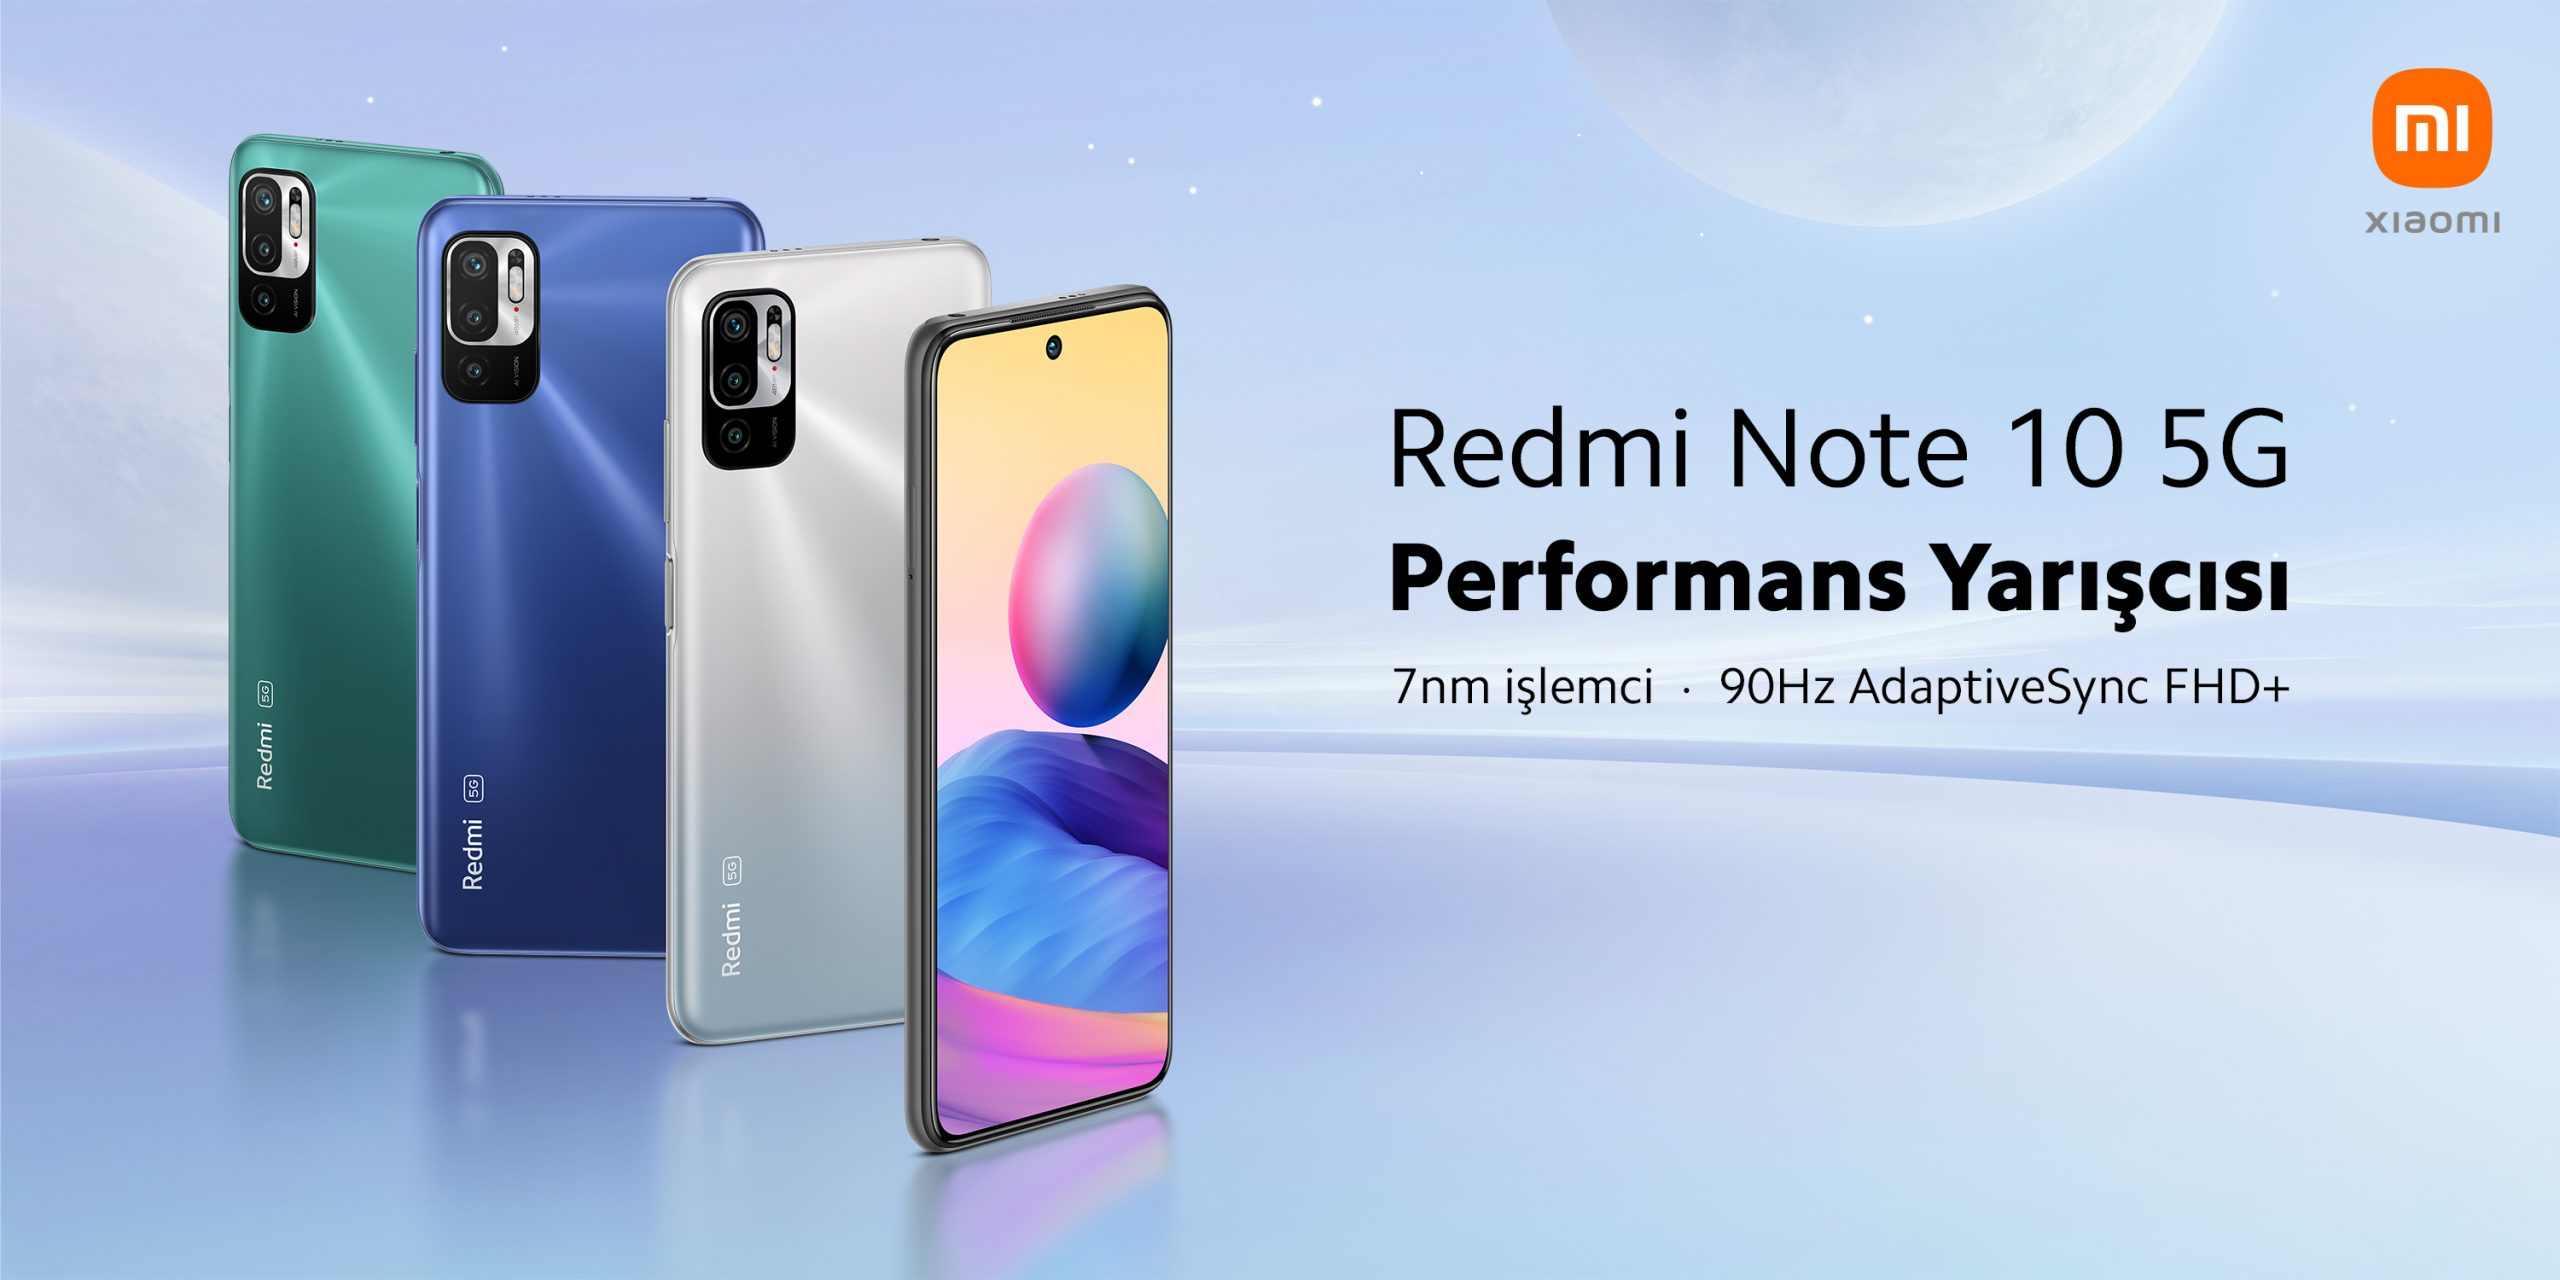 Redmi-Note-10-5G-scaled.jpg